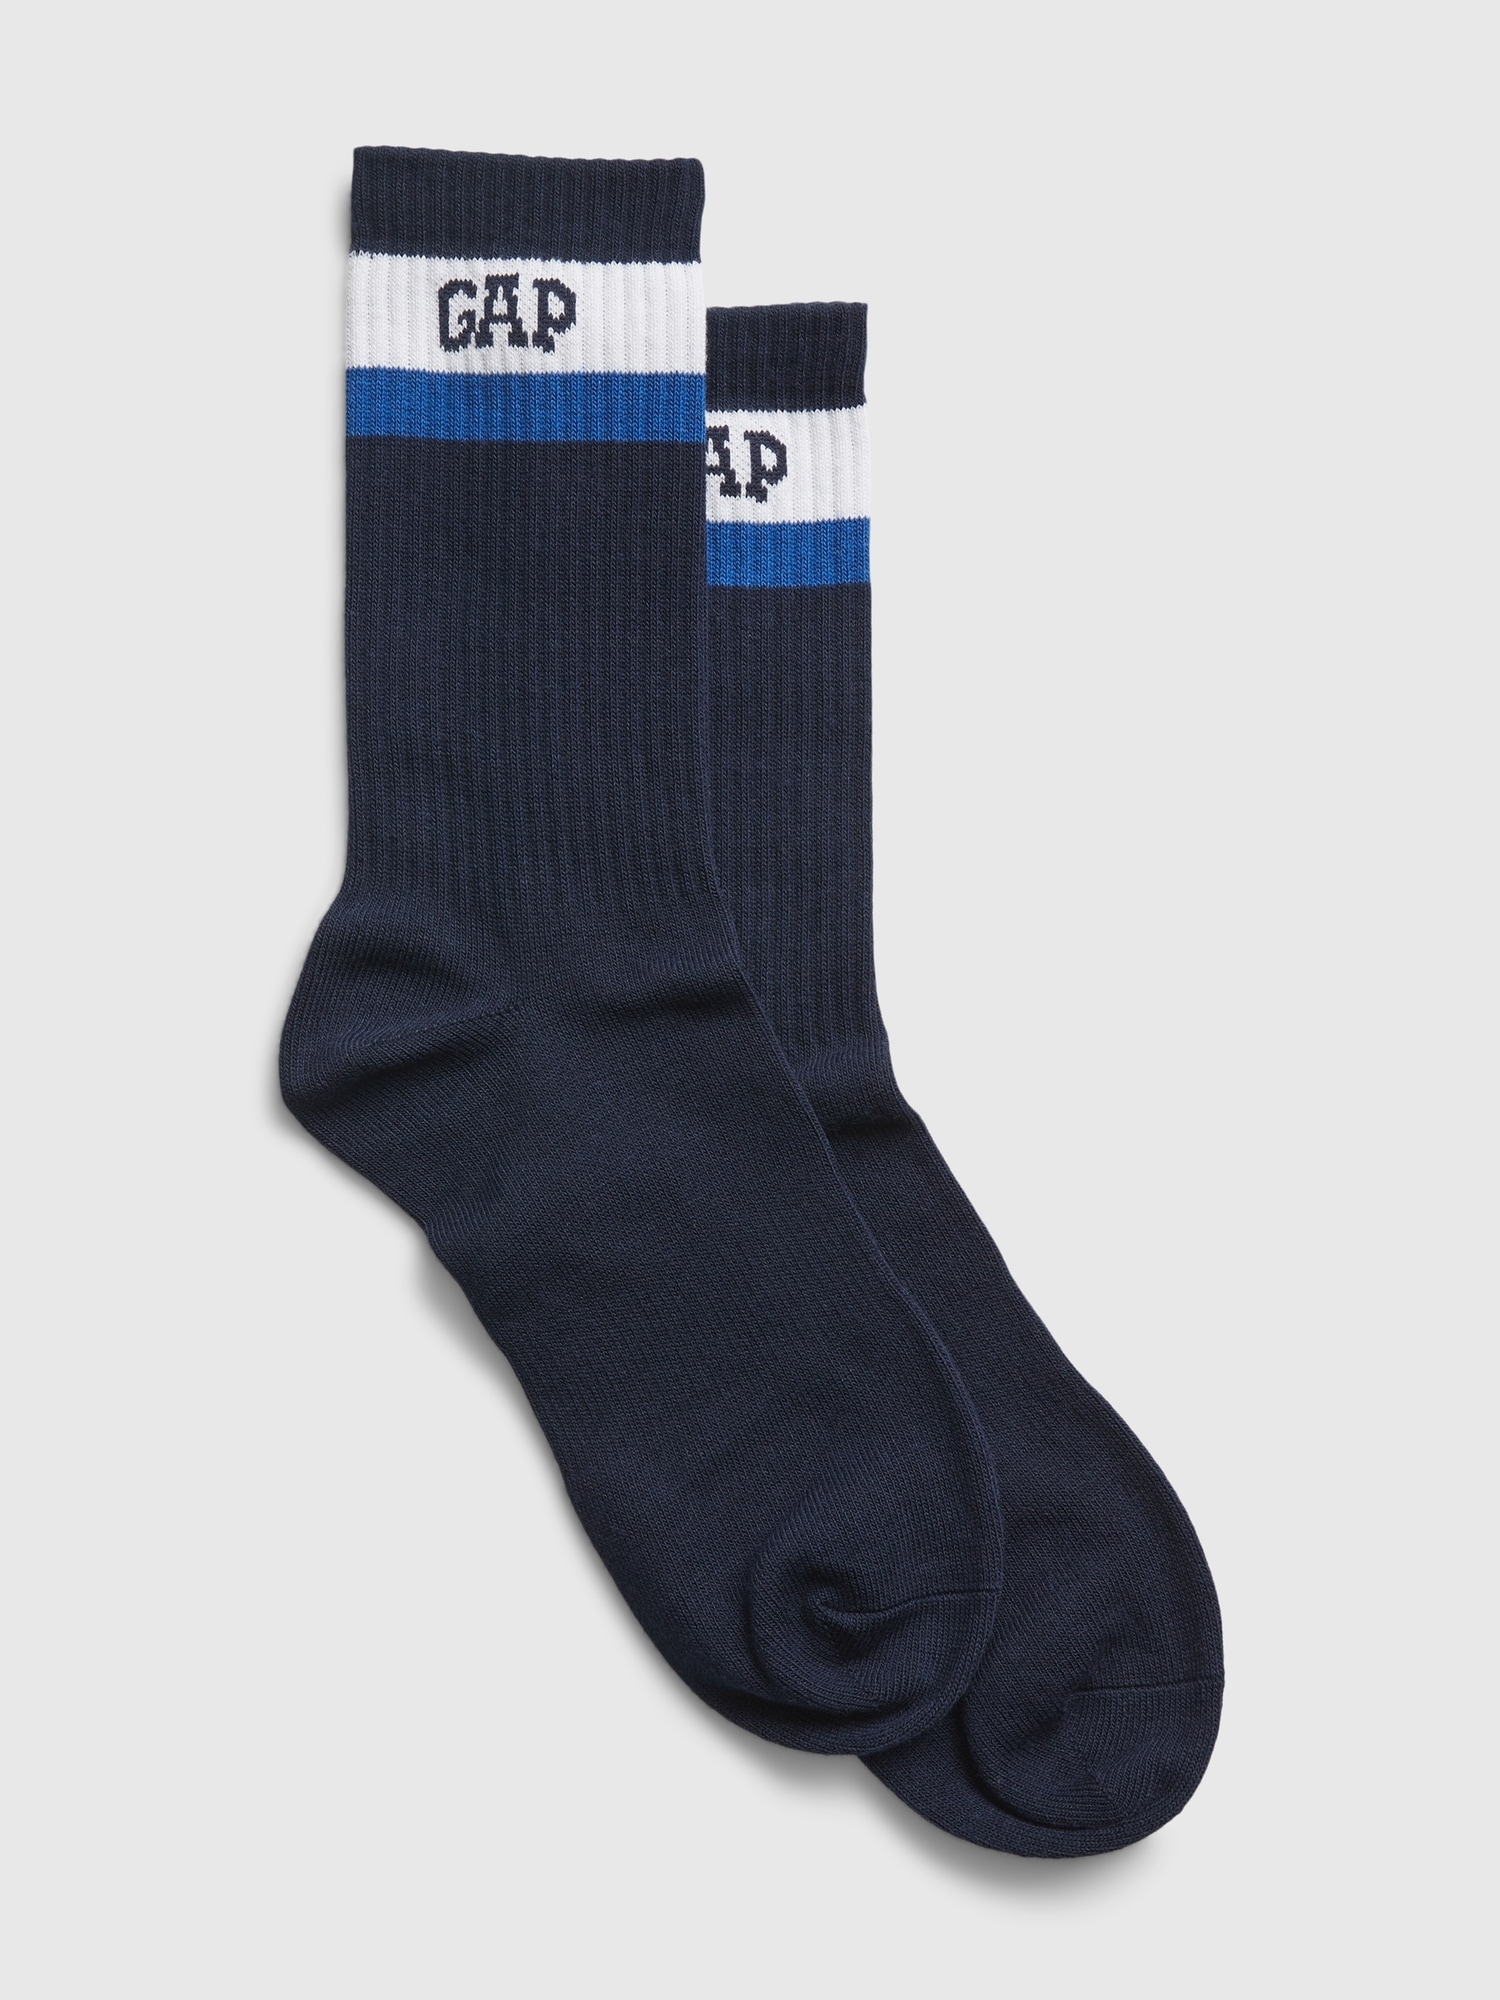 GAP Men's Athletic High Socks - Men